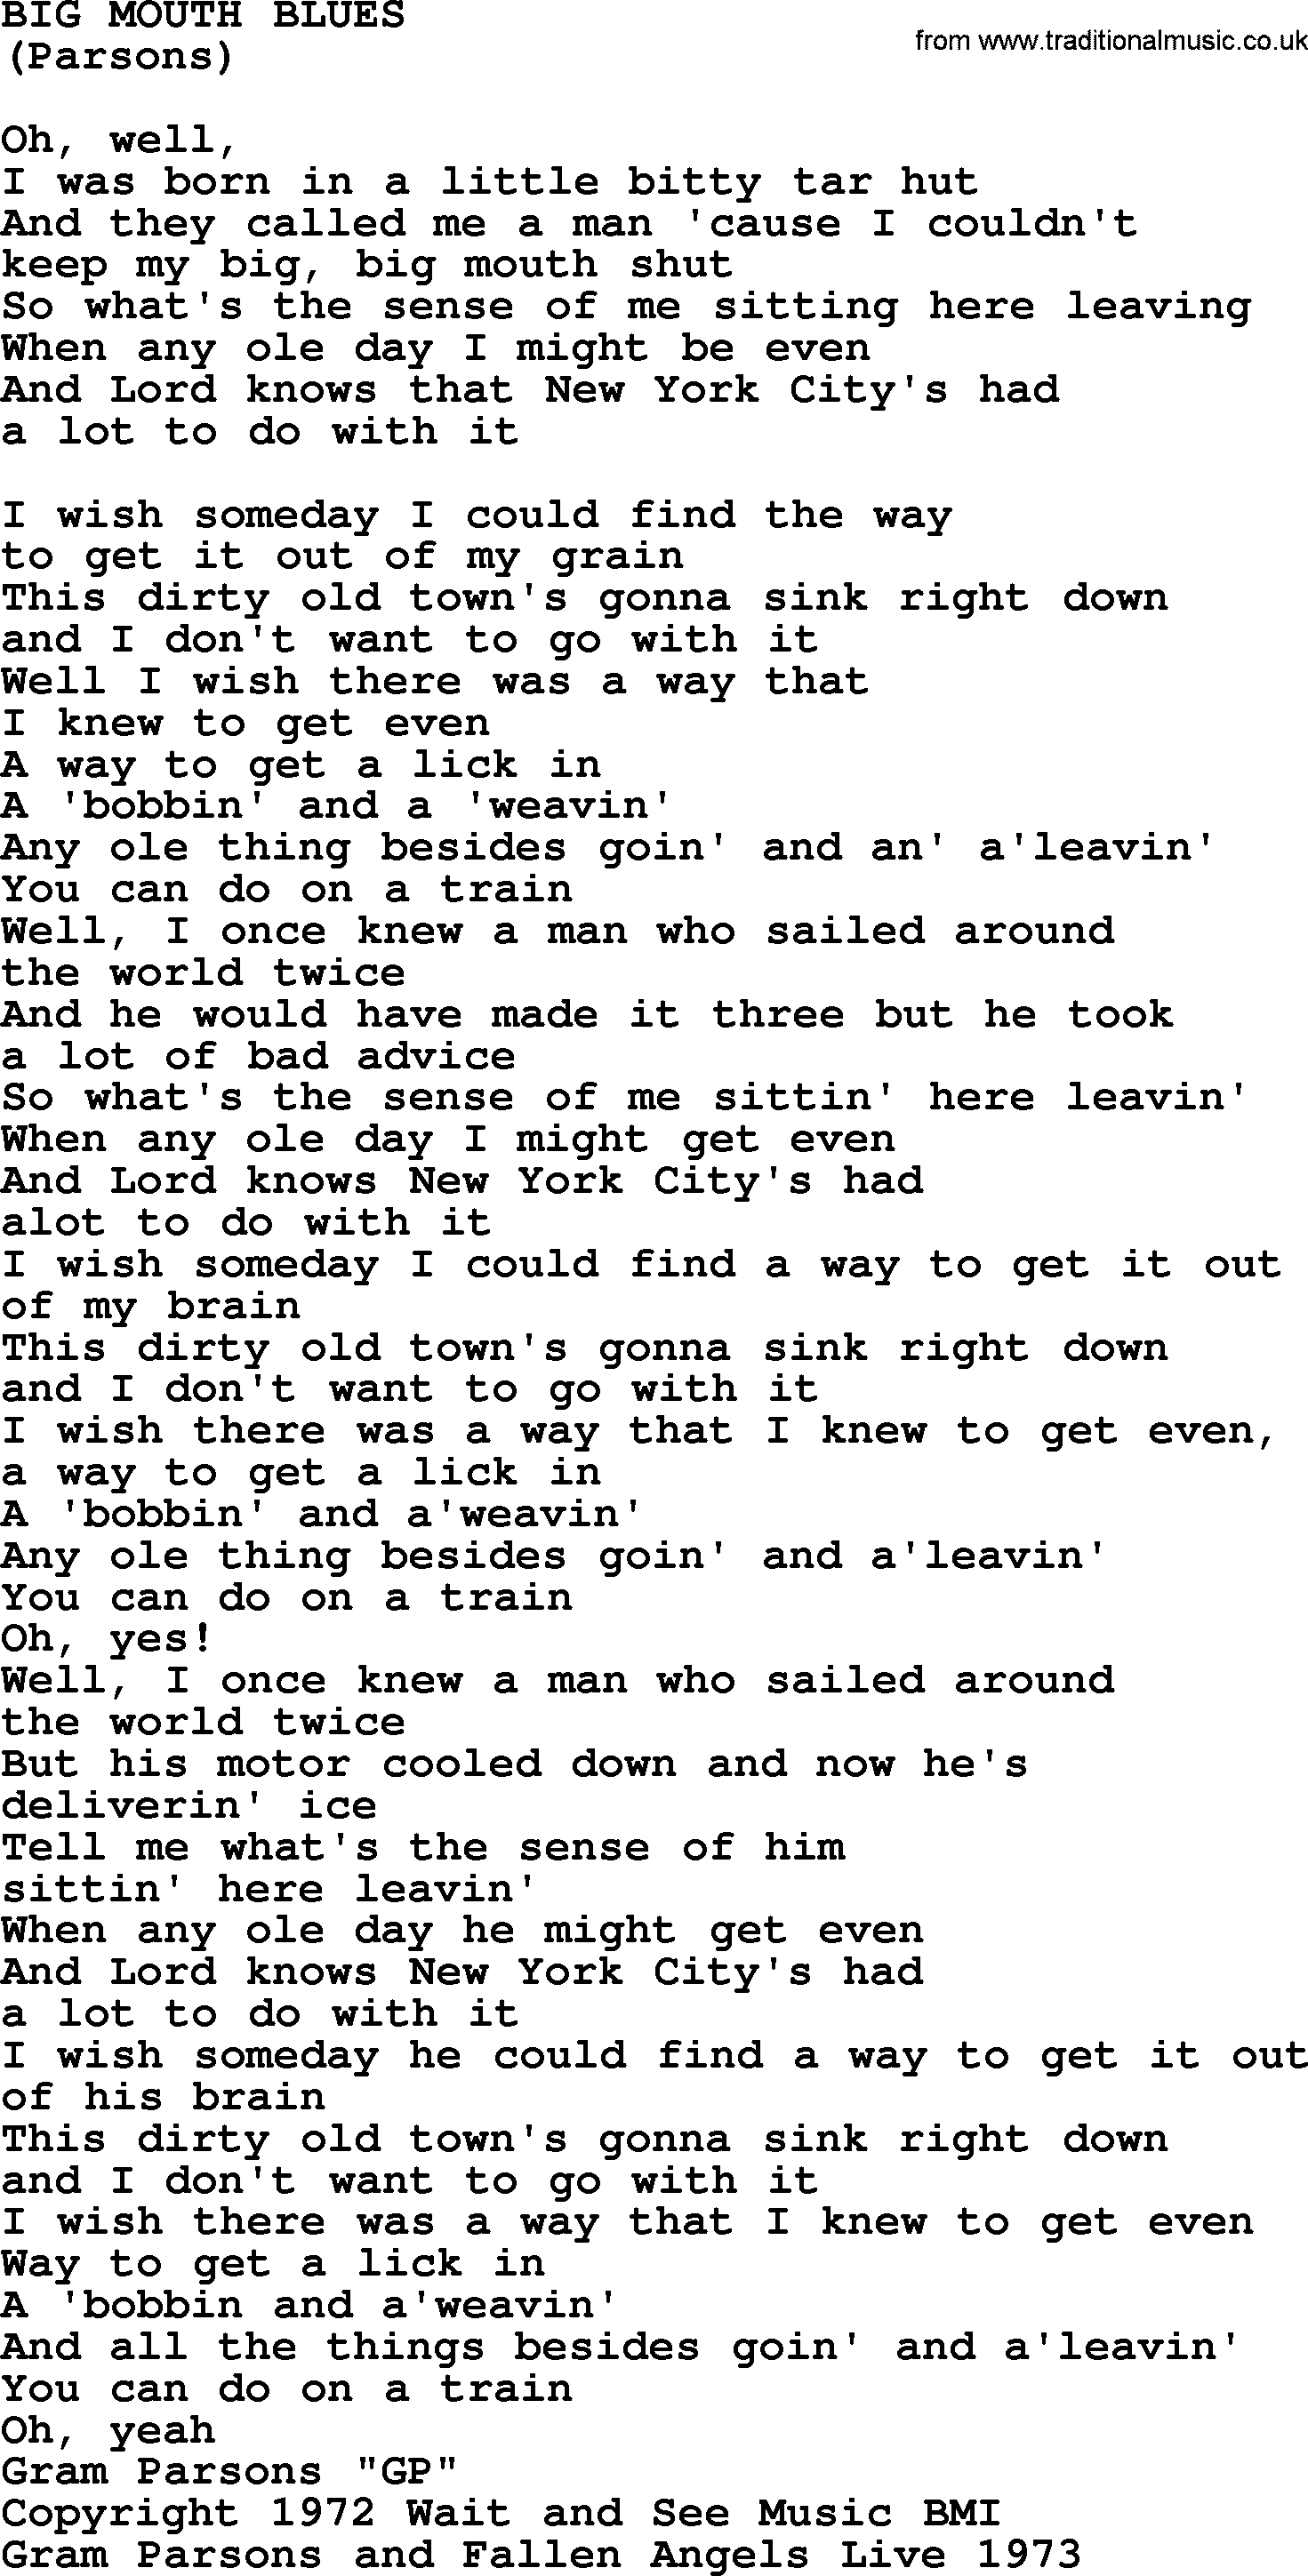 The Byrds song Big Mouth Blues, lyrics